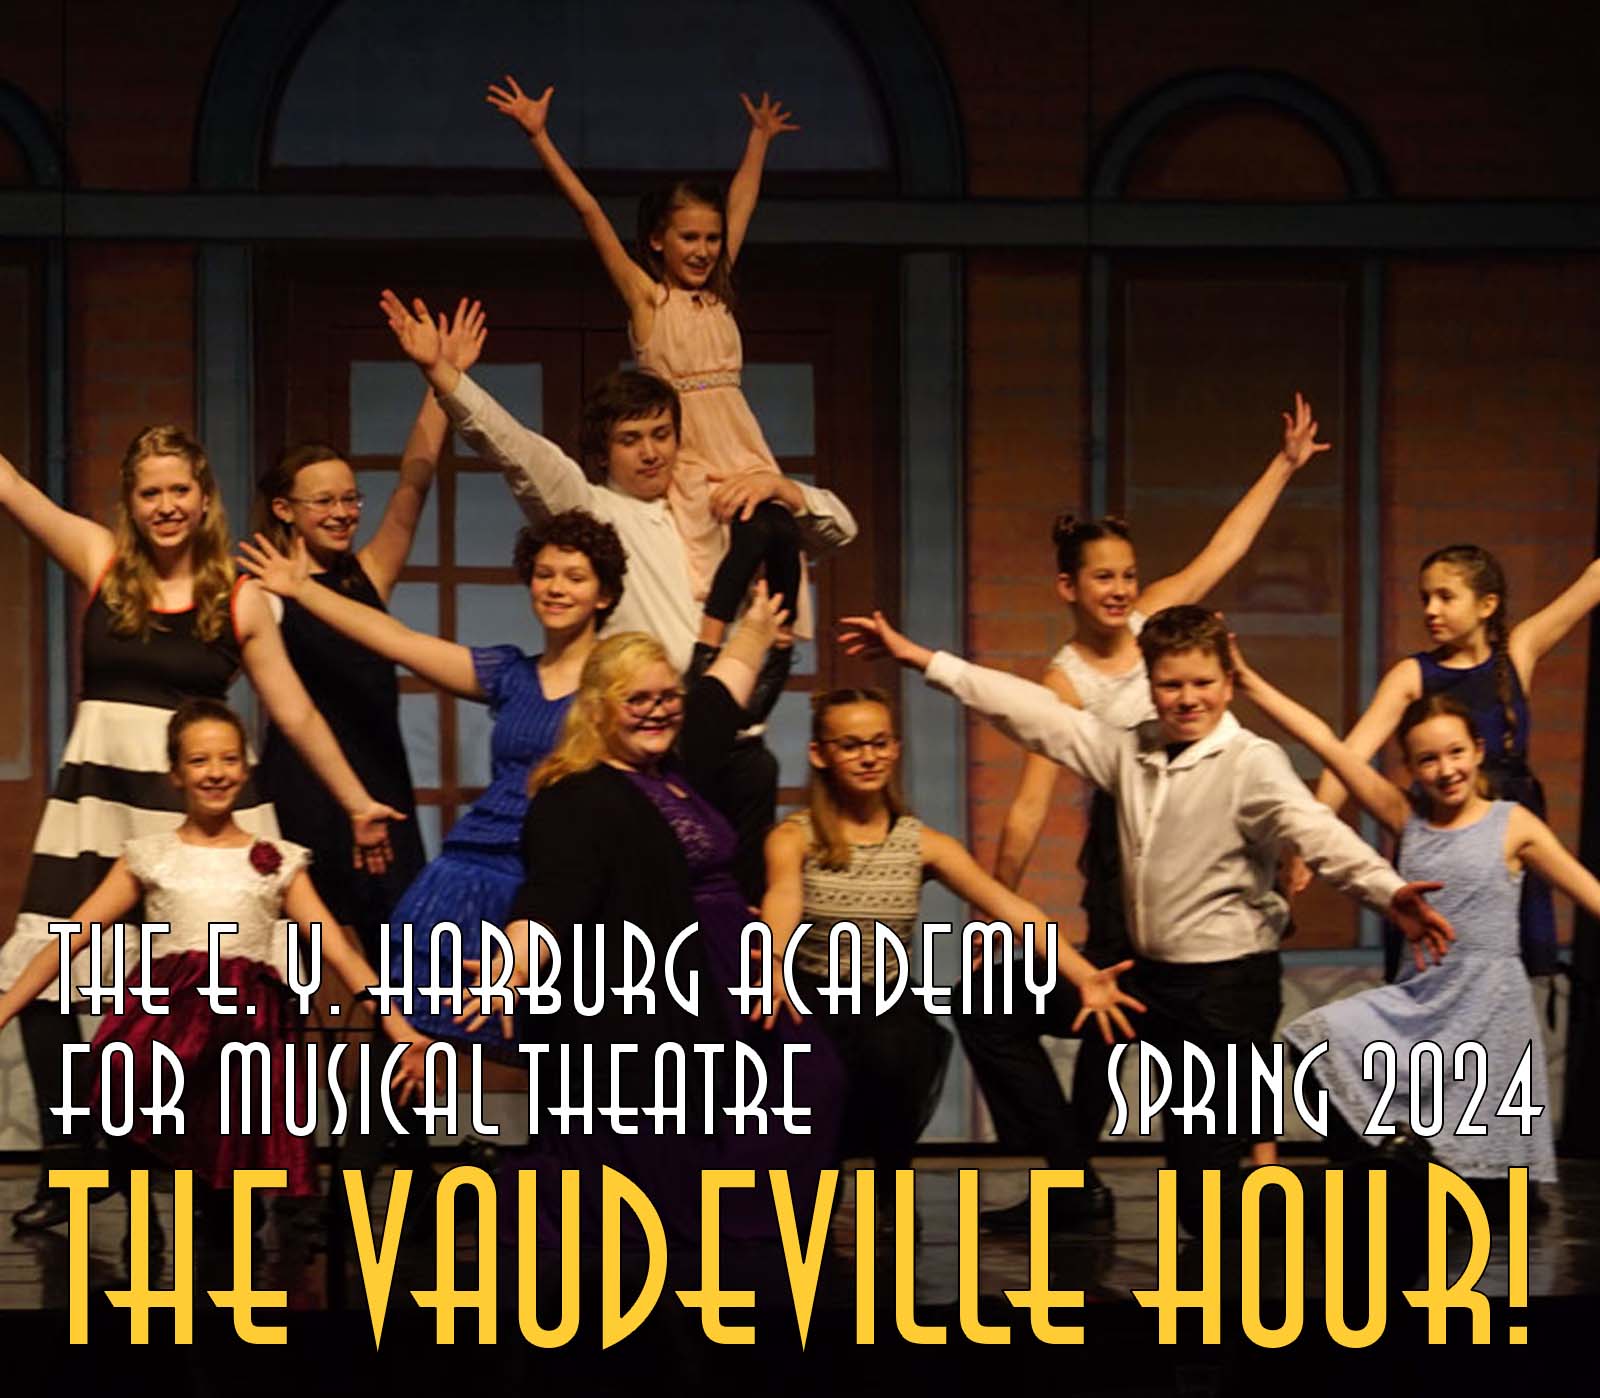 VaudevilleHour-2024 Spring-3